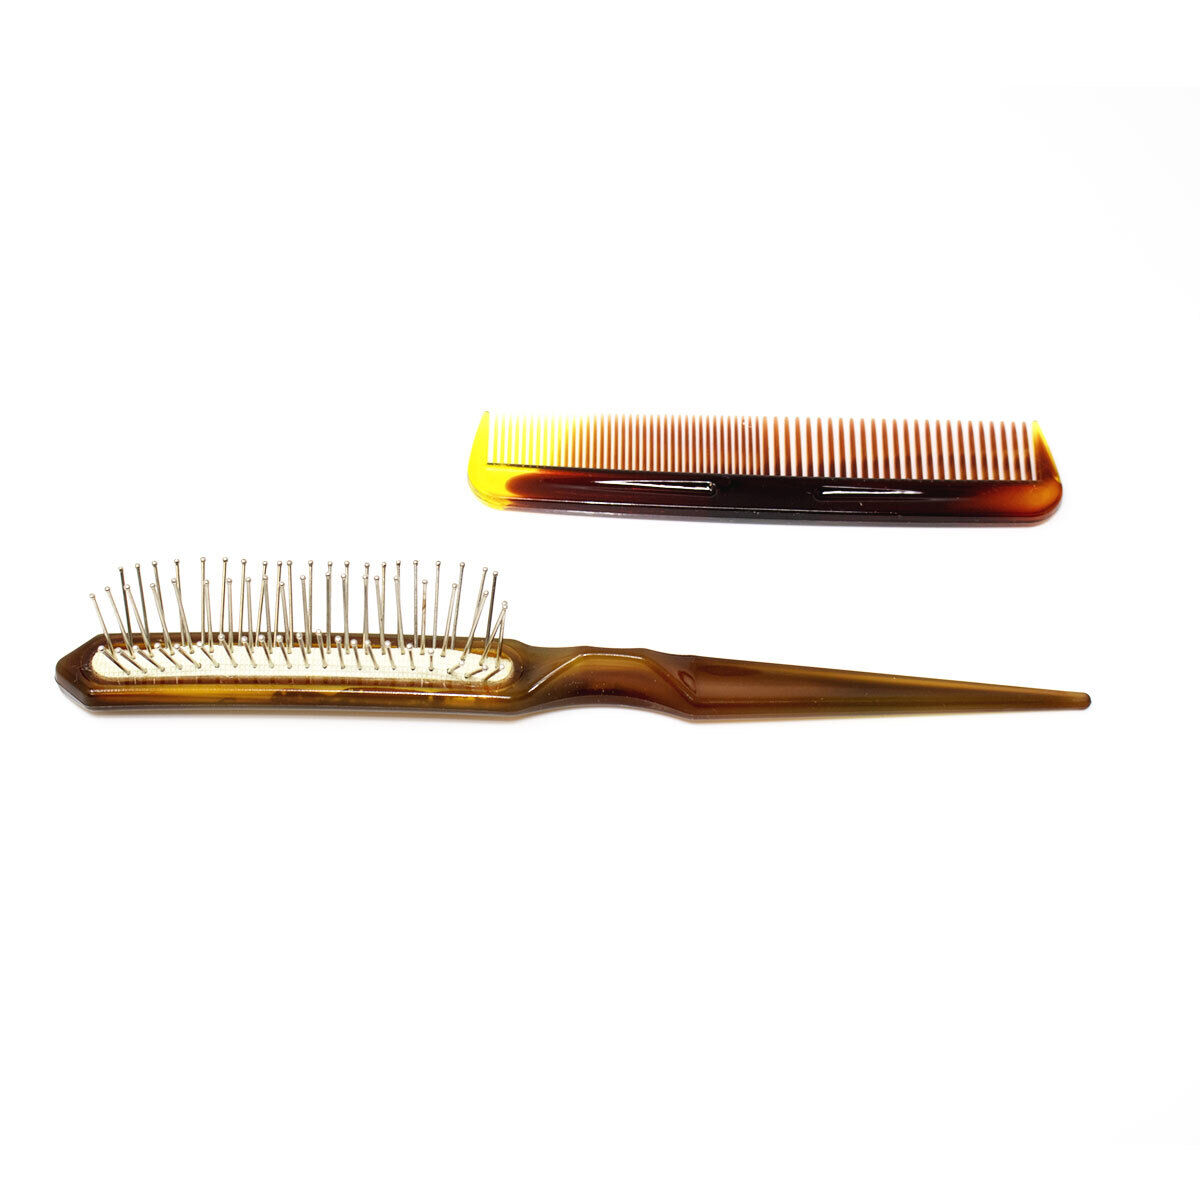 Plastic Paddle Hair Brush Oval Square Anti static for men or women salon  quality | eBay